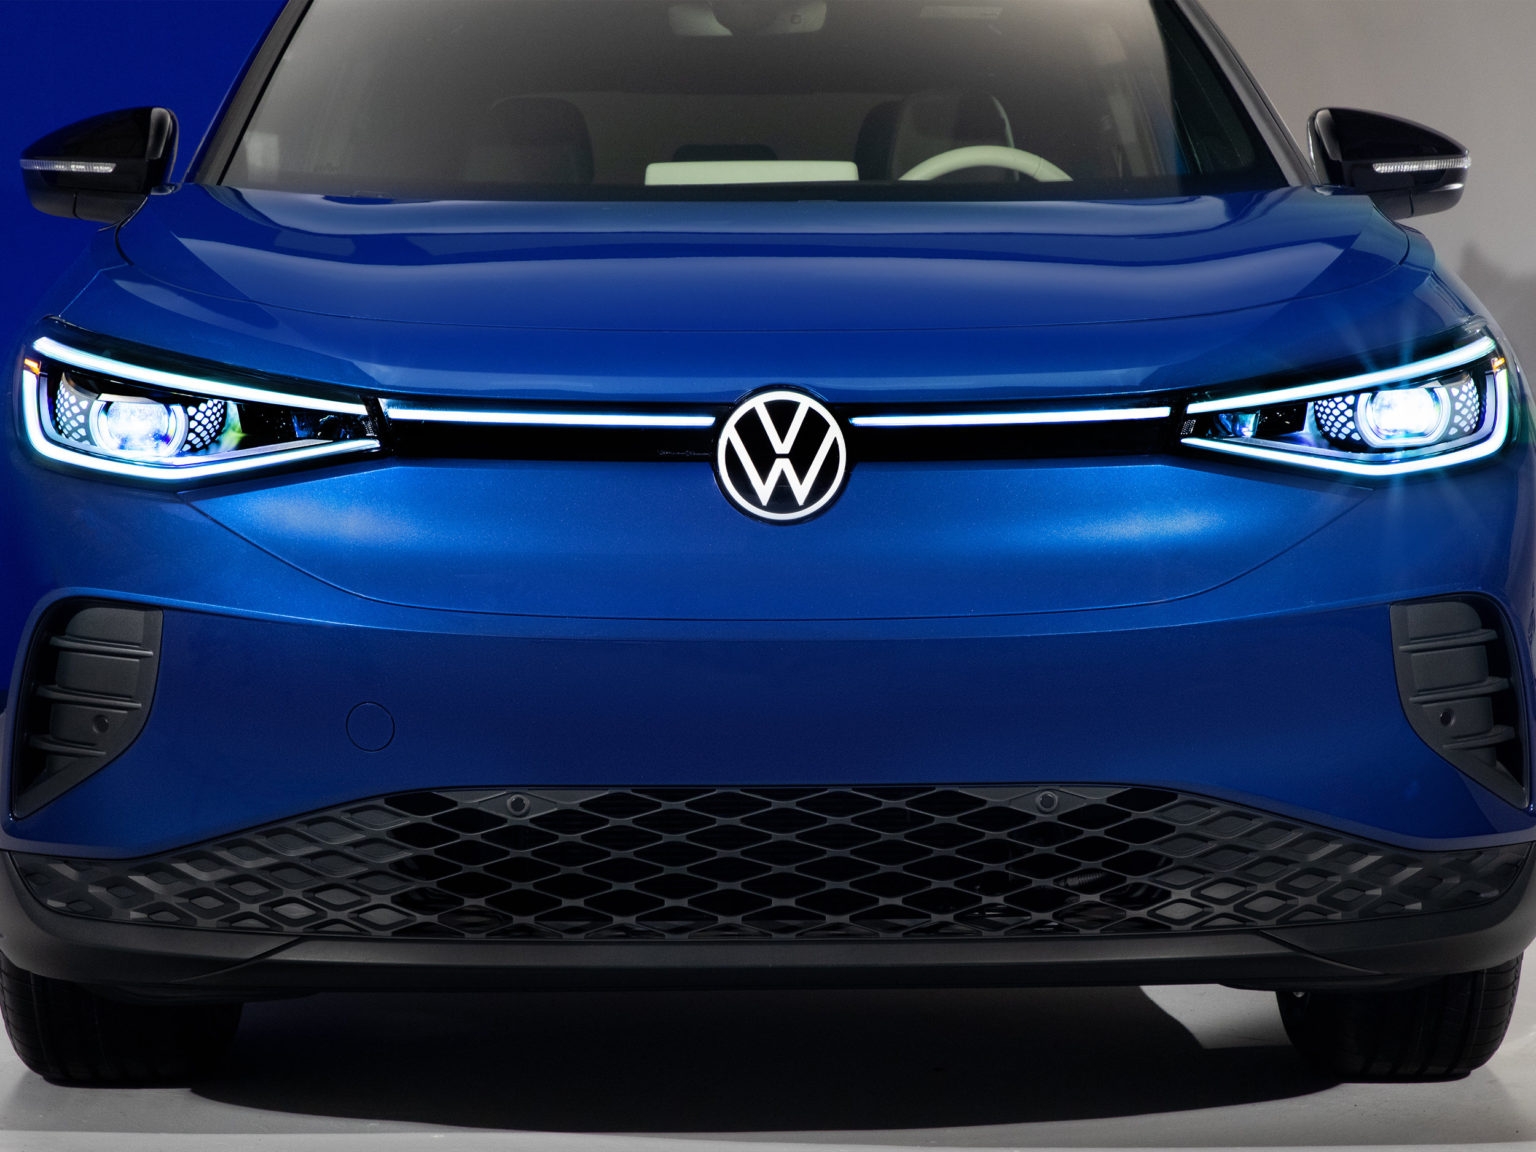 The 2021 Volkswagen ID.4 is Volkswagen's newest all-electric offering.